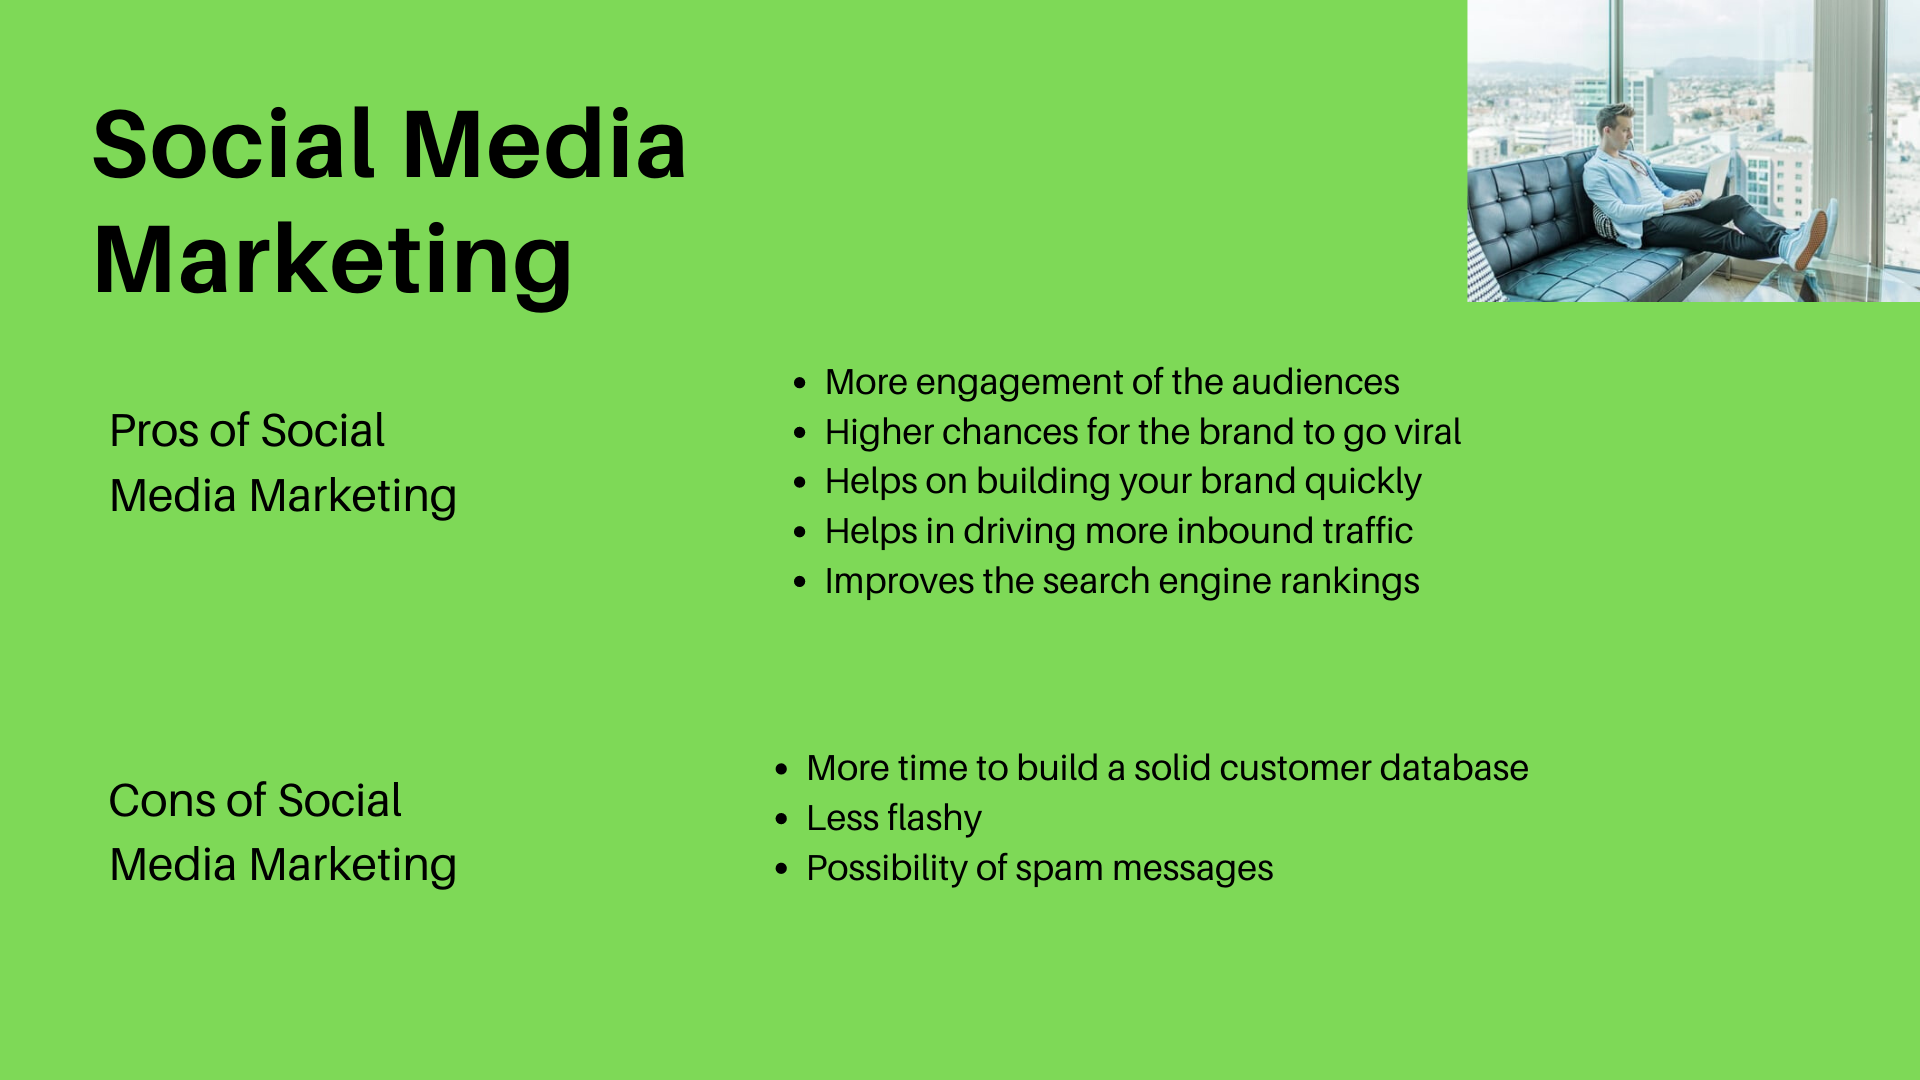 Social Media Marketing Vs Email Marketing